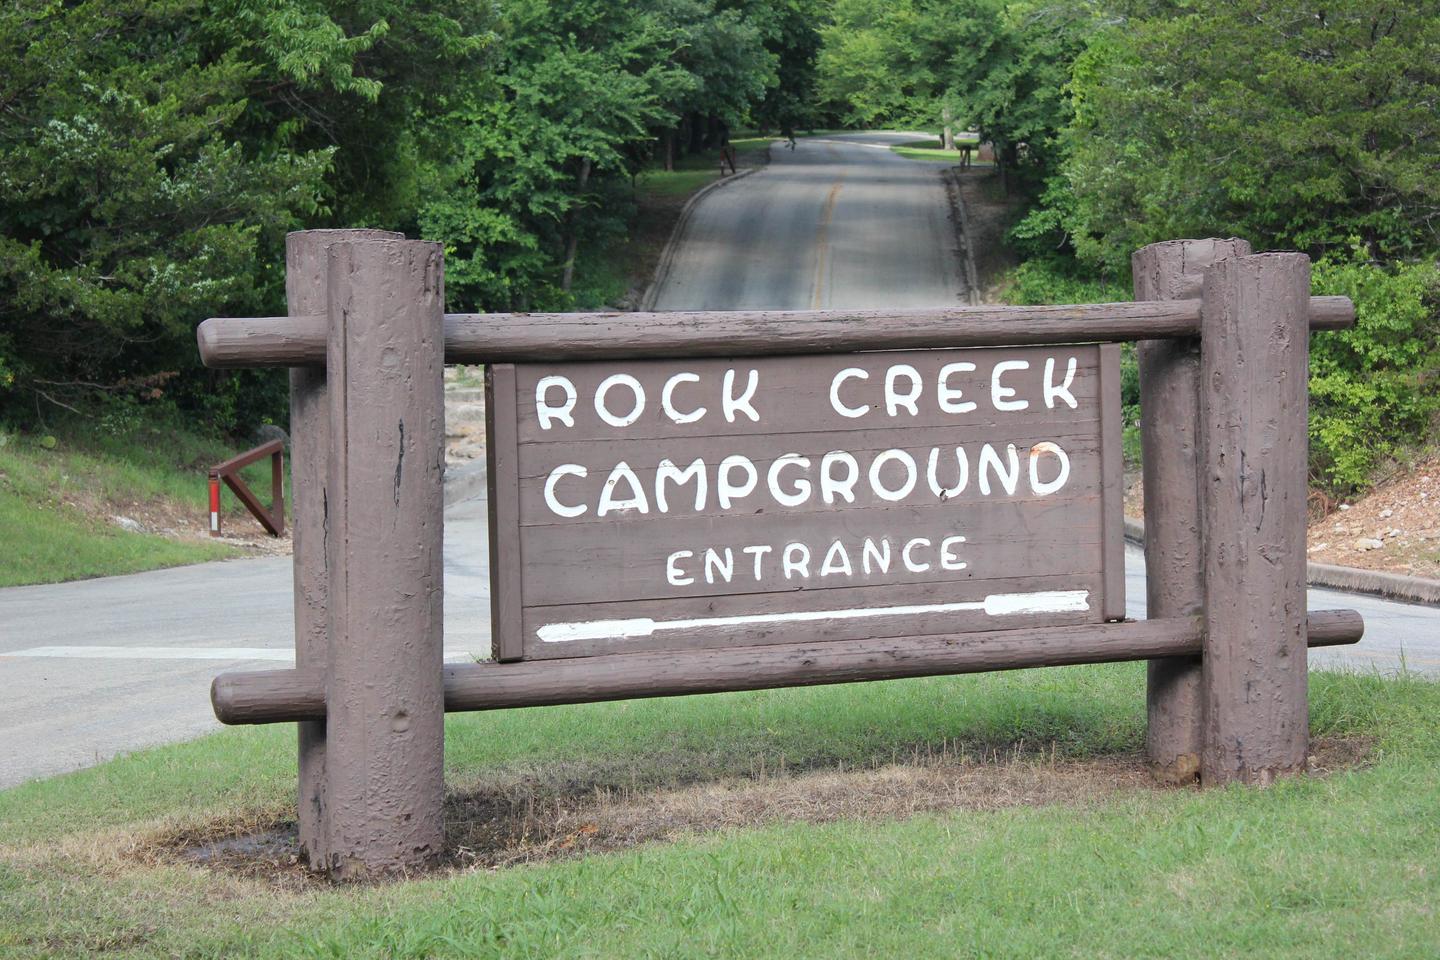 Rock Creek Campground Image 1Rock Creek Campground